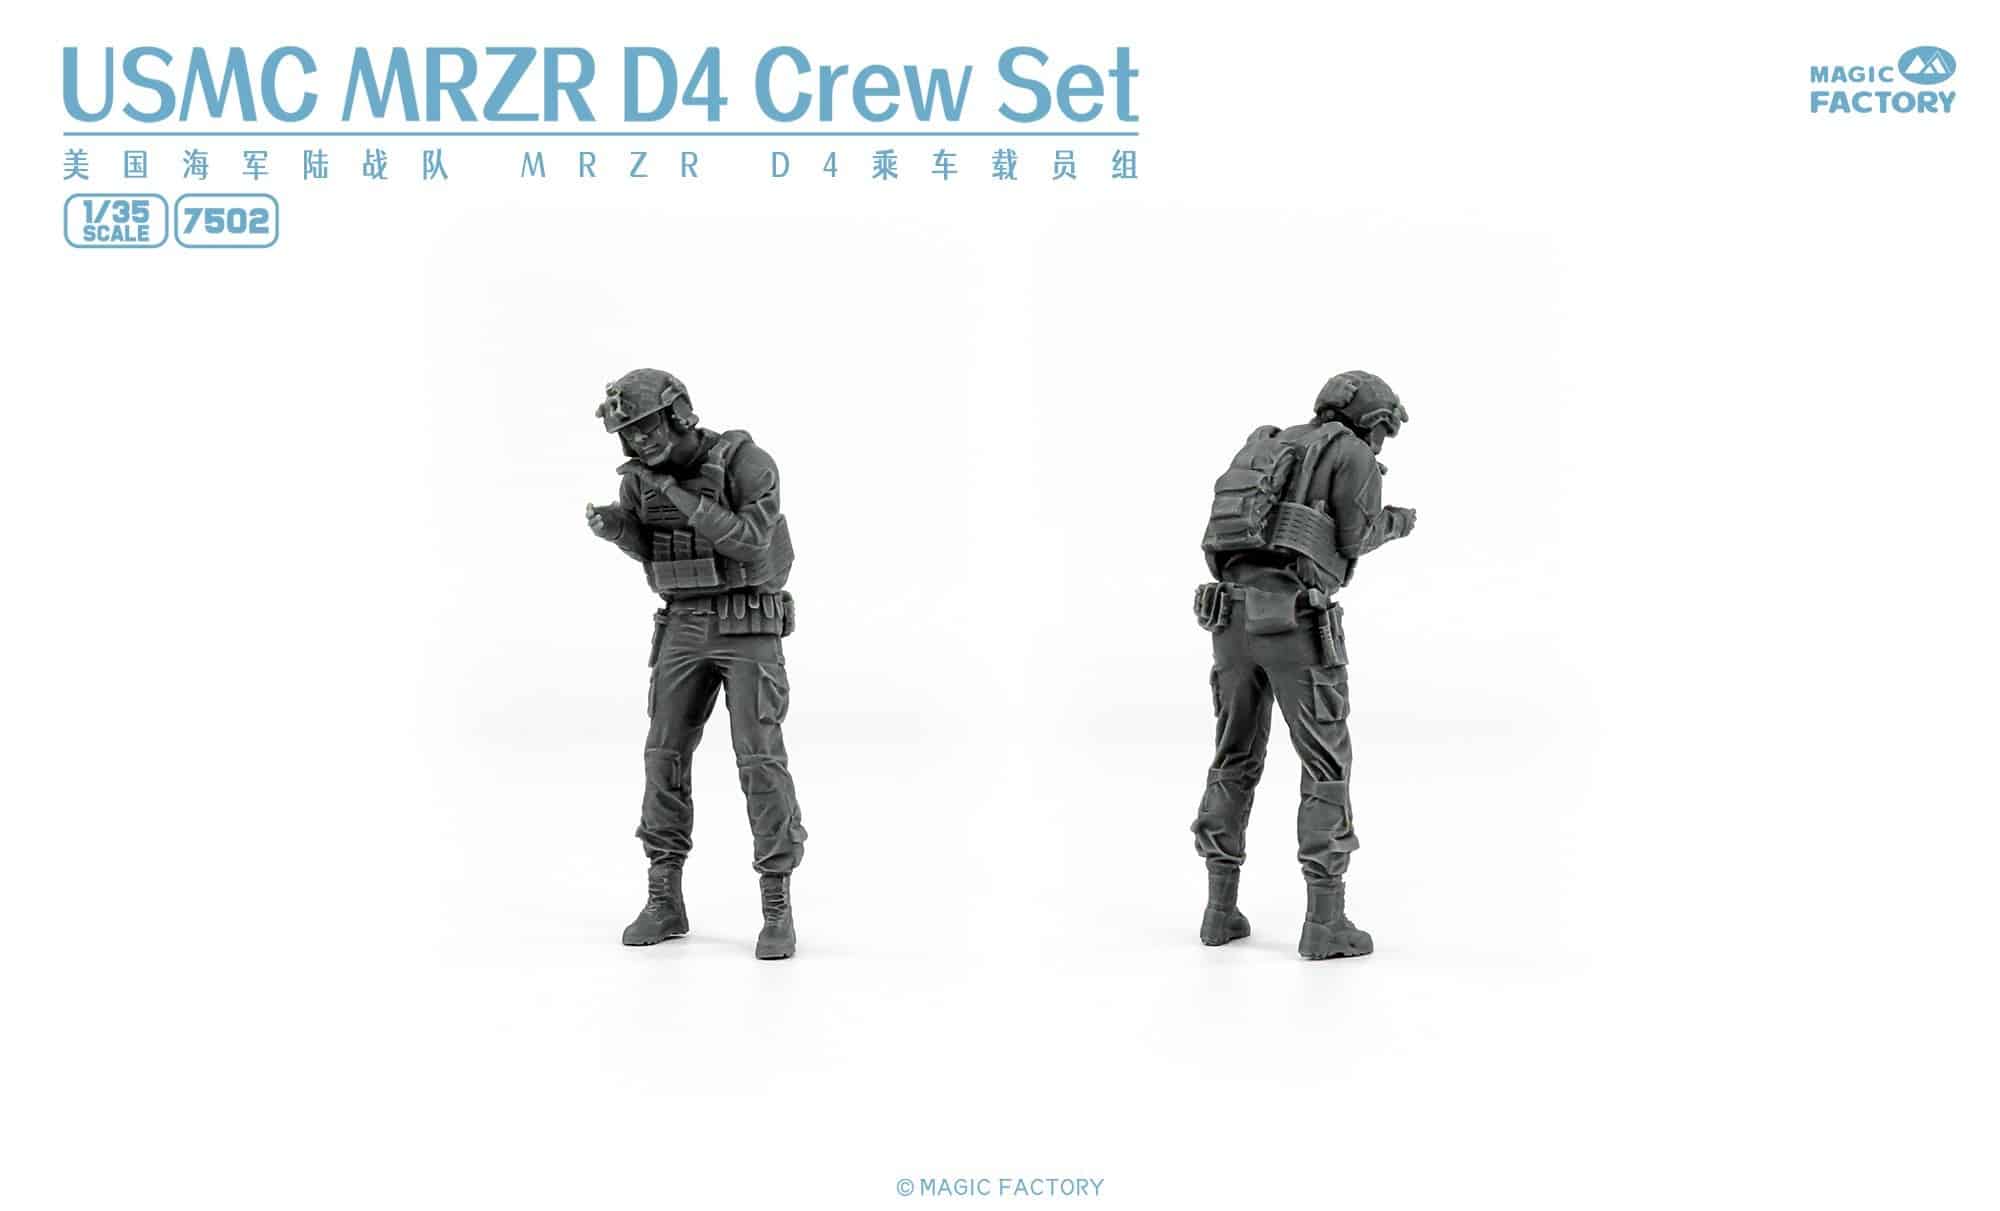 New USMC MRZR D4 Crew Set Available from Magic Factory-4